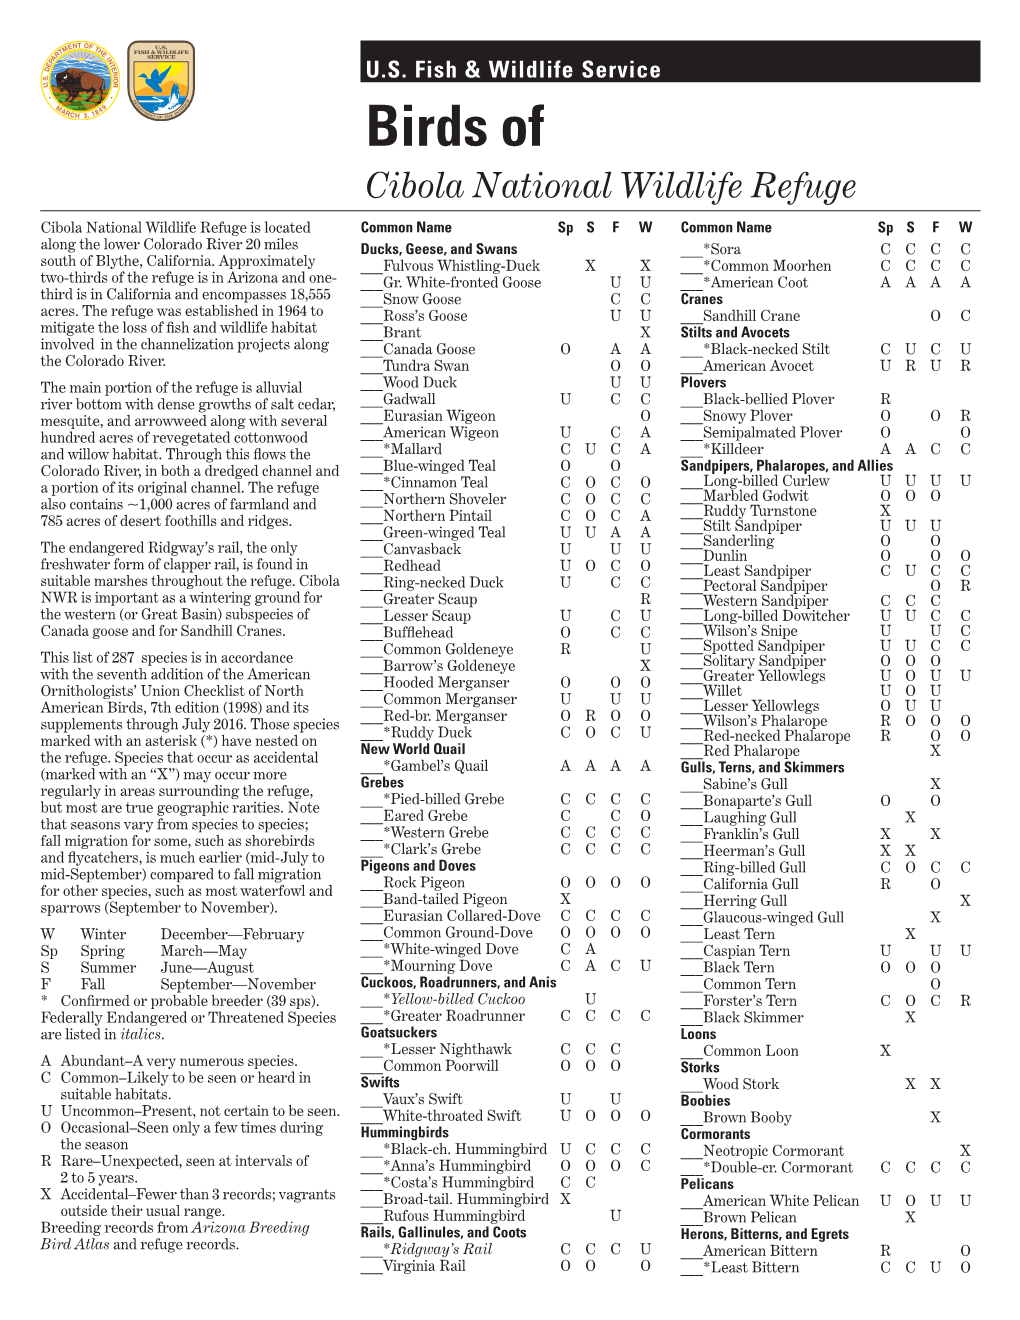 Birds of Cibola National Wildlife Refuge